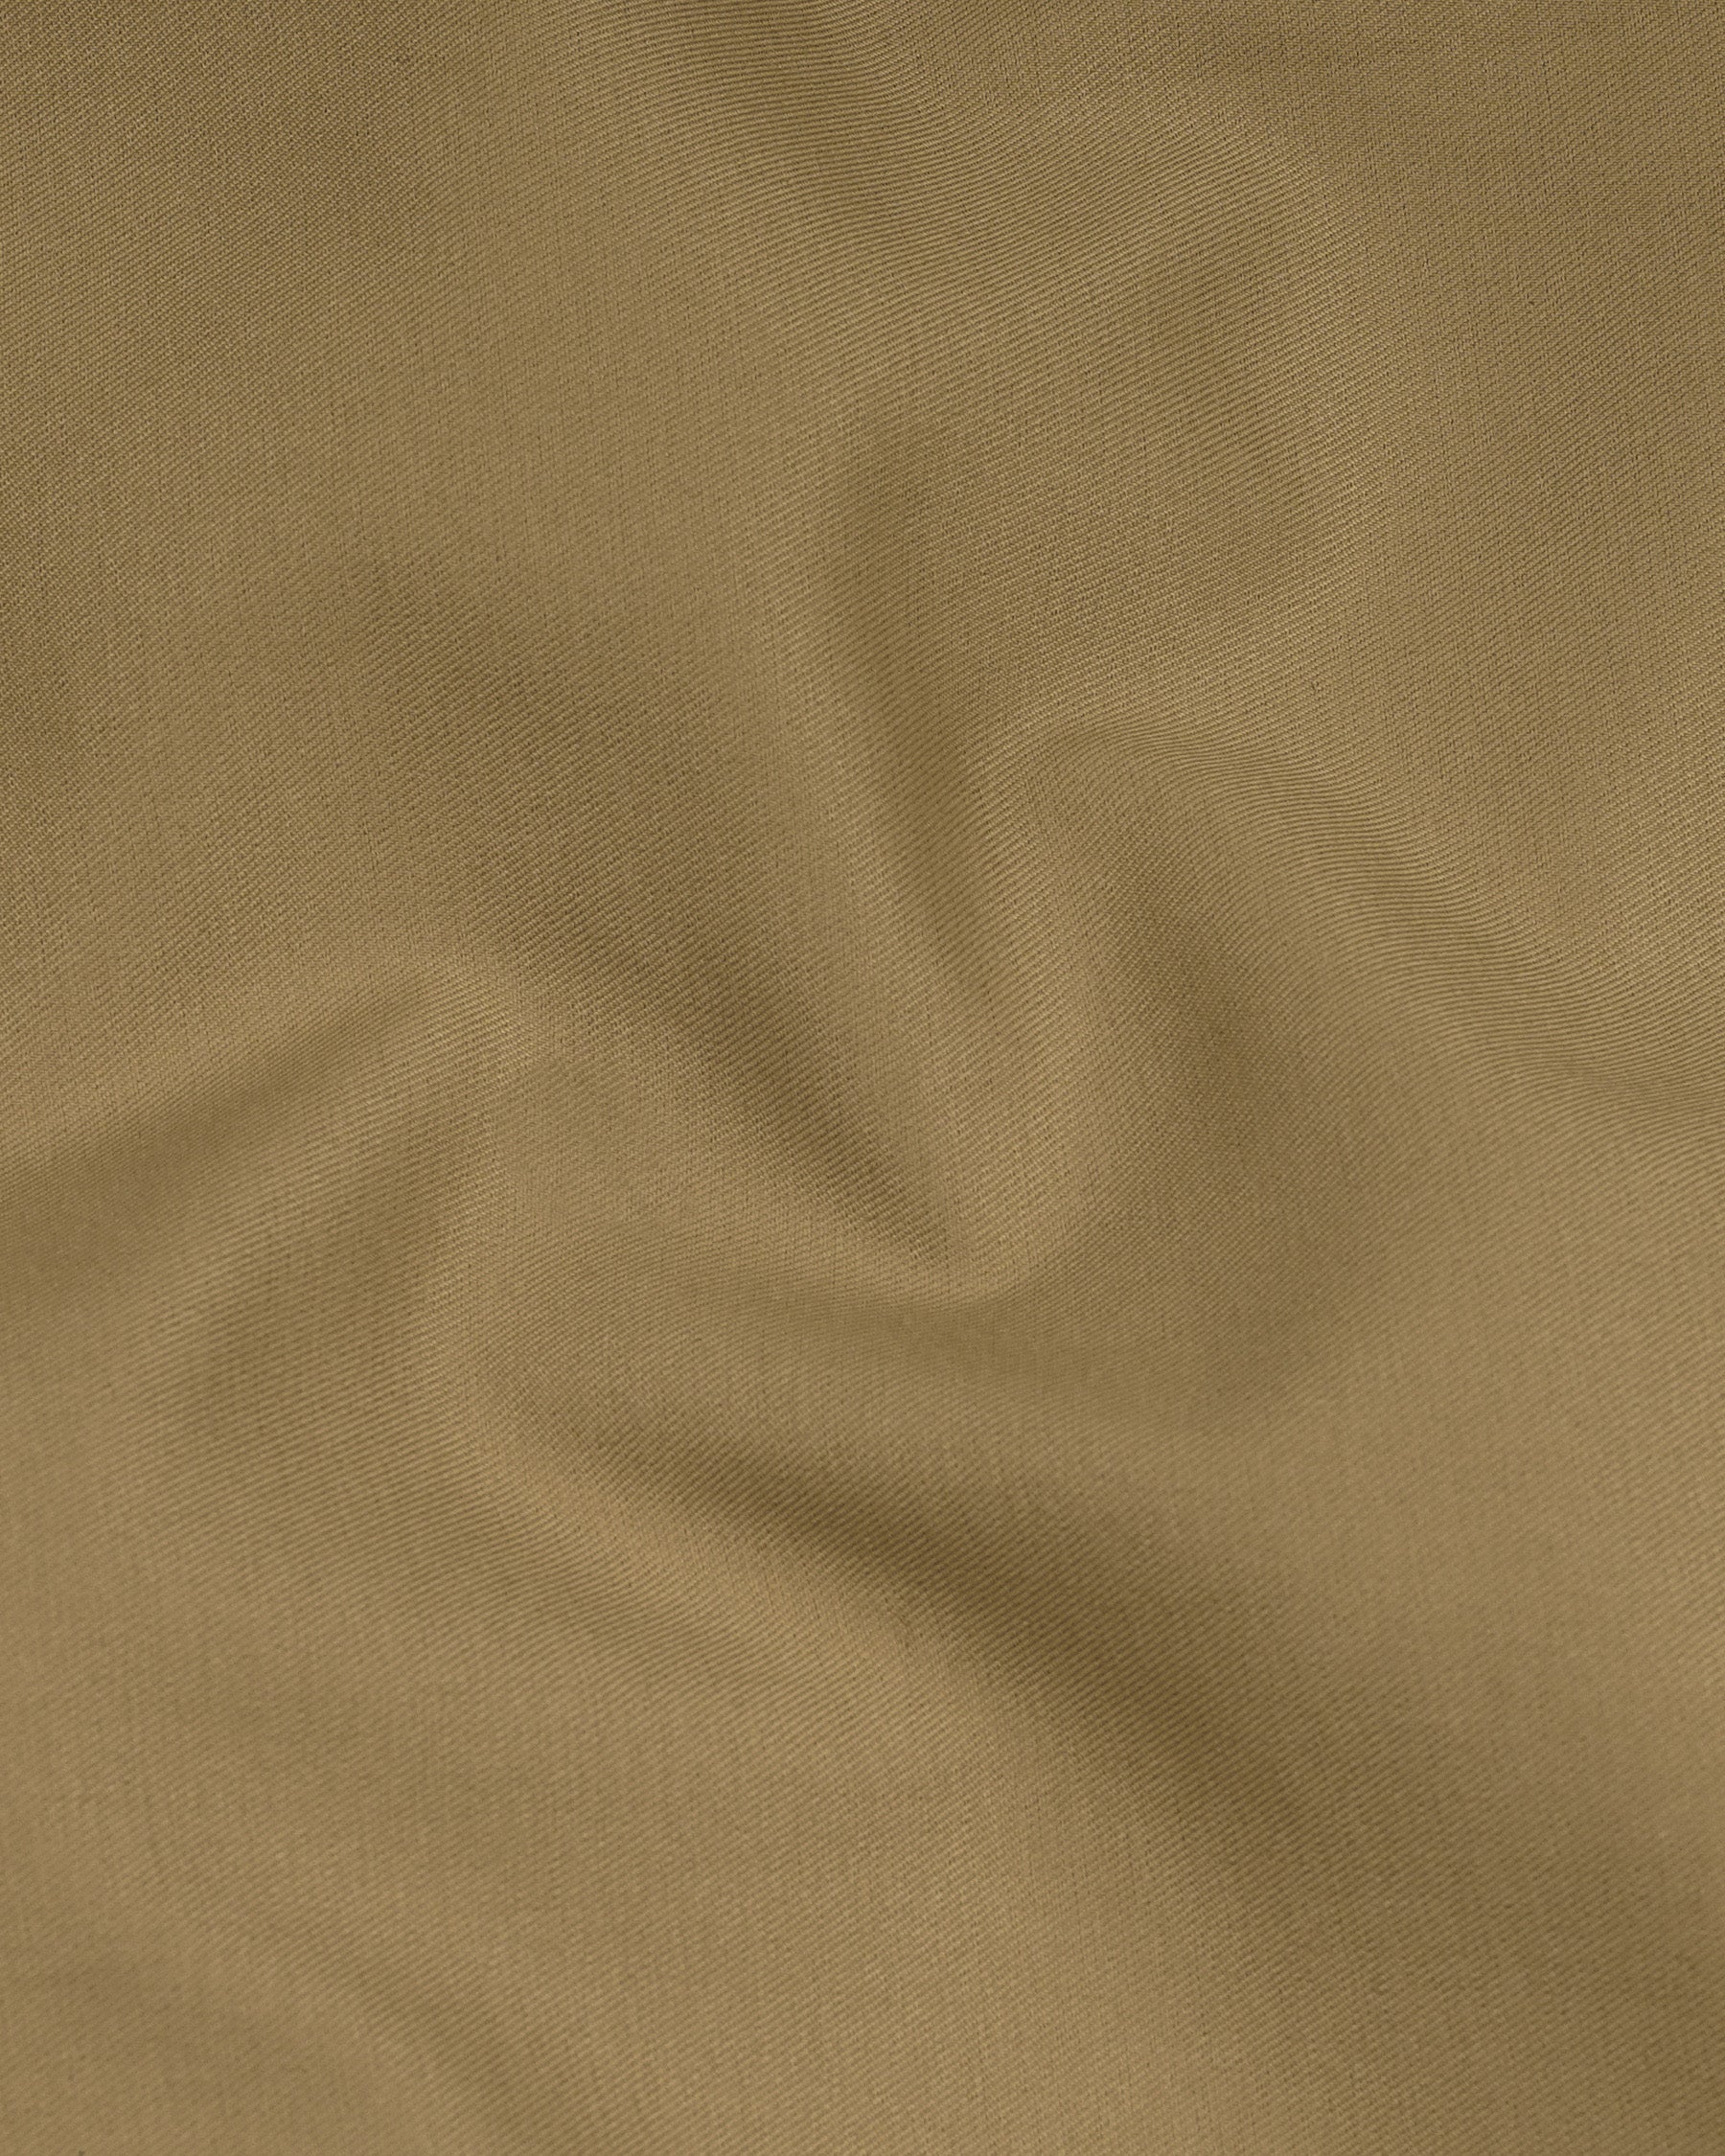 Shadow Brown Premium Cotton Waistcoat V2132-36, V2132-38, V2132-40, V2132-42, V2132-44, V2132-46, V2132-48, V2132-50, V2132-52, V2132-54, V2132-56, V2132-58, V2132-60